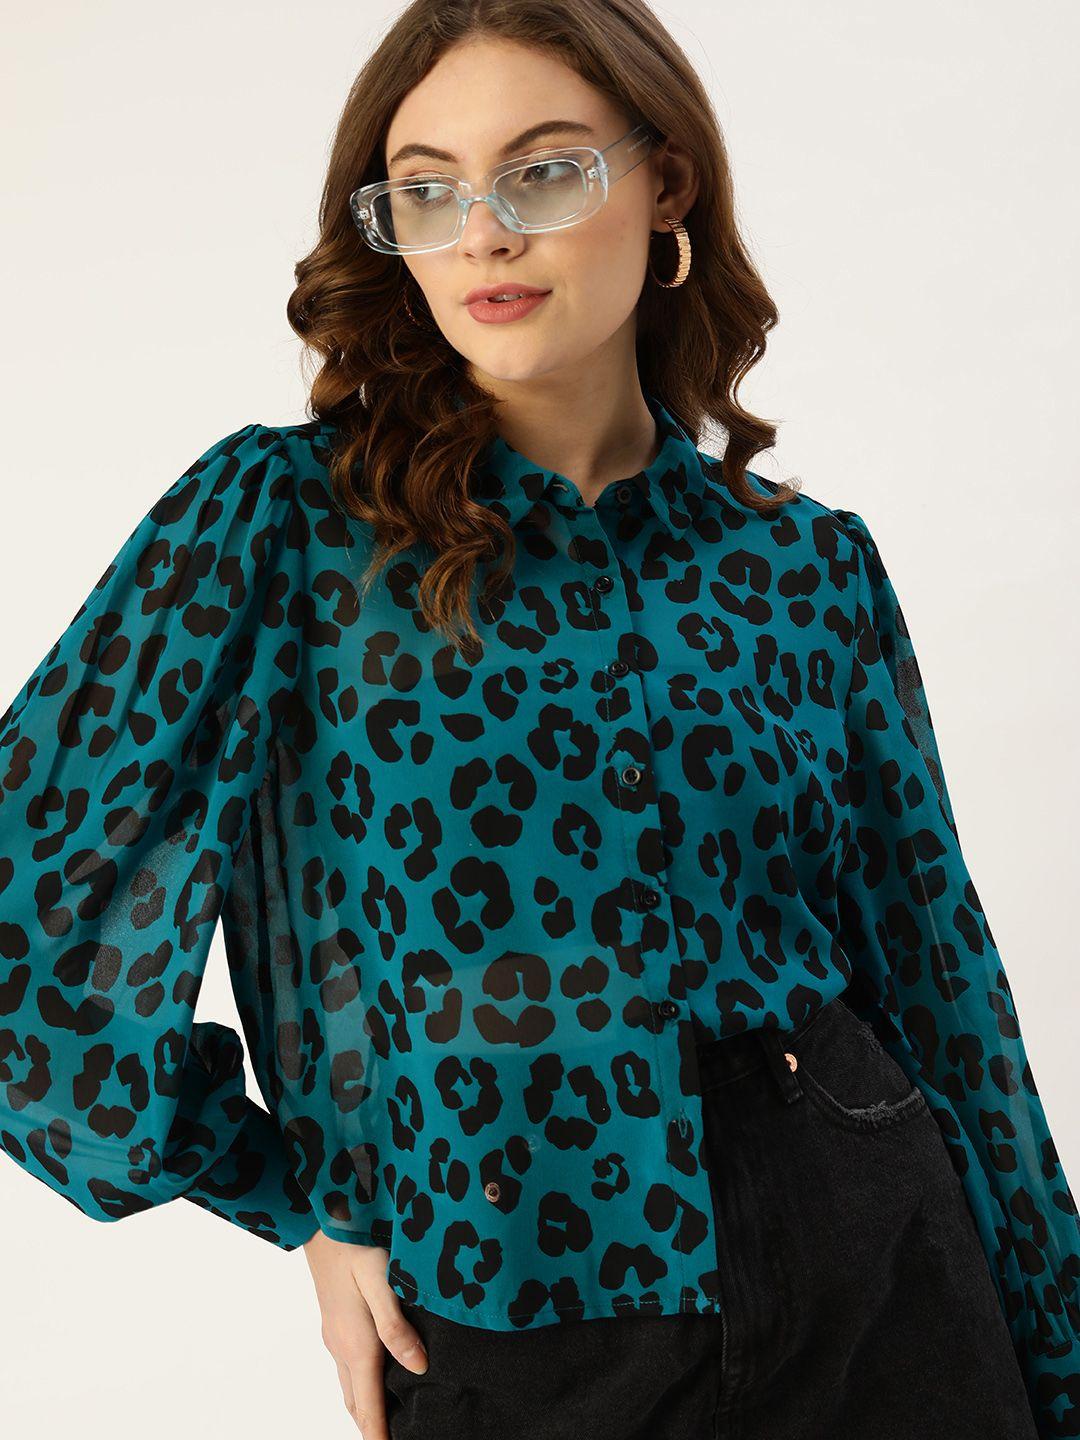 dressberry teal blue & black animal print shirt style top